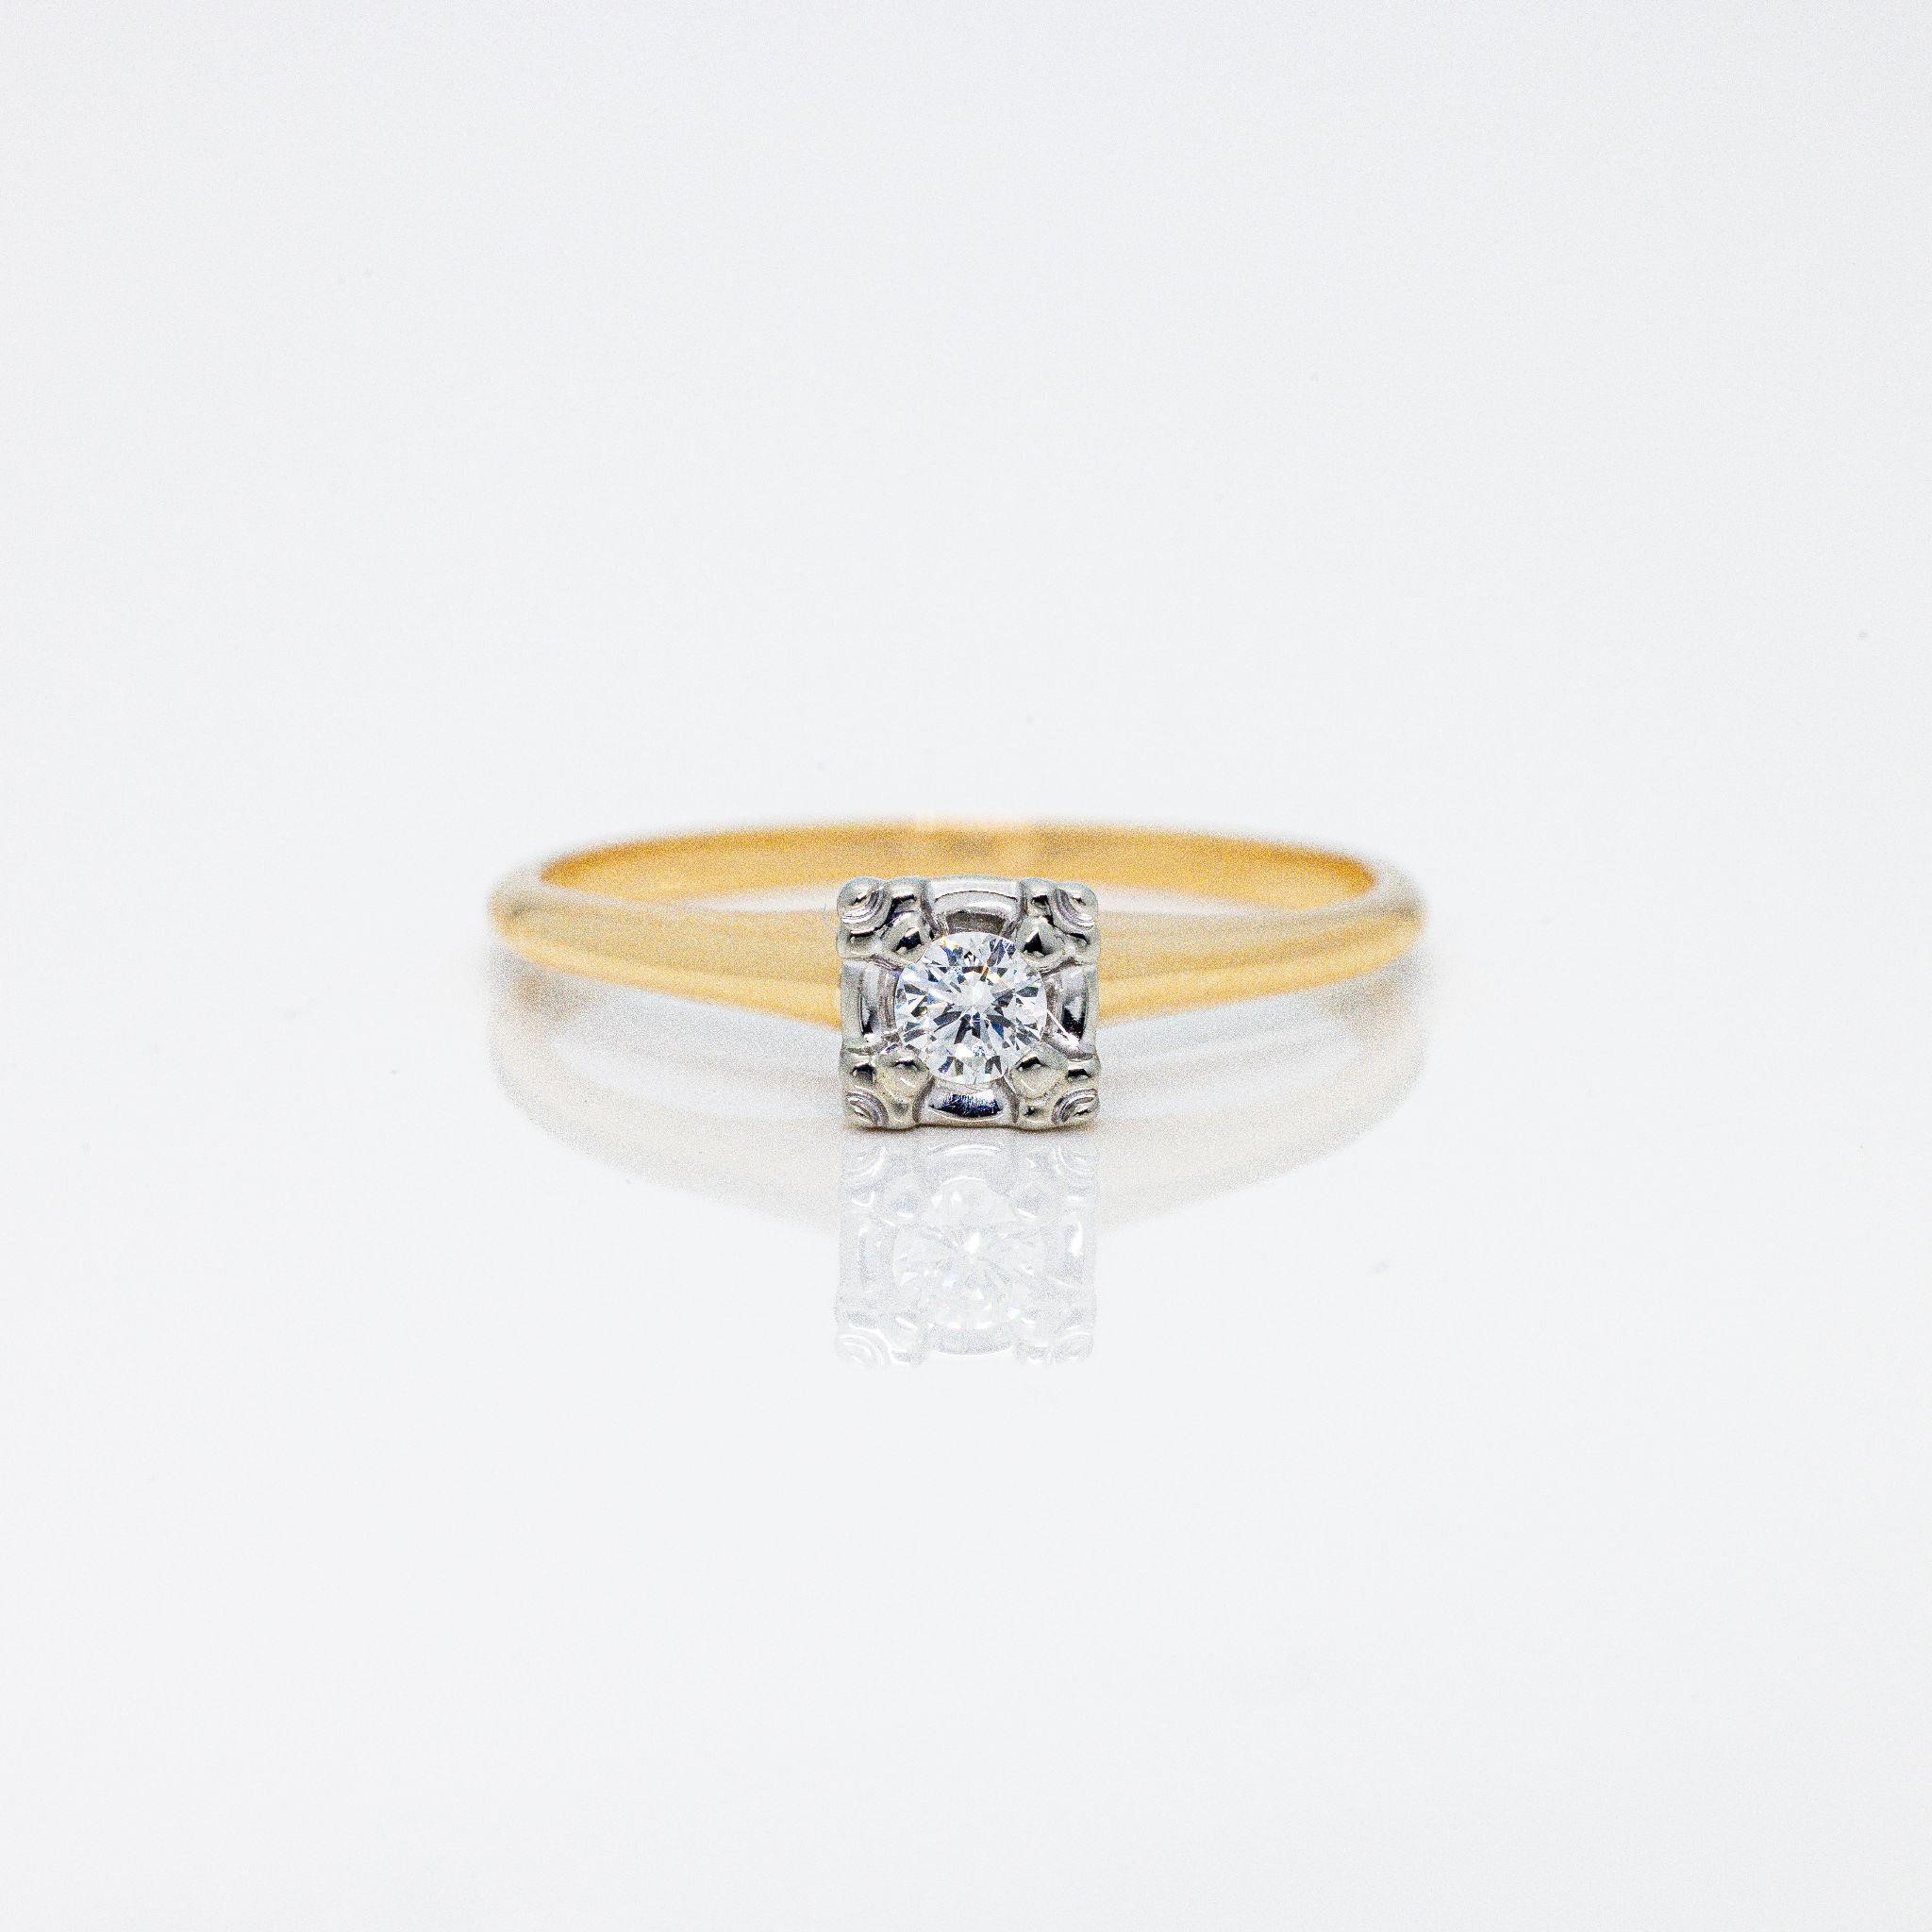 Vintage 14kt Gold Diamond Keepsake Engagement Ring